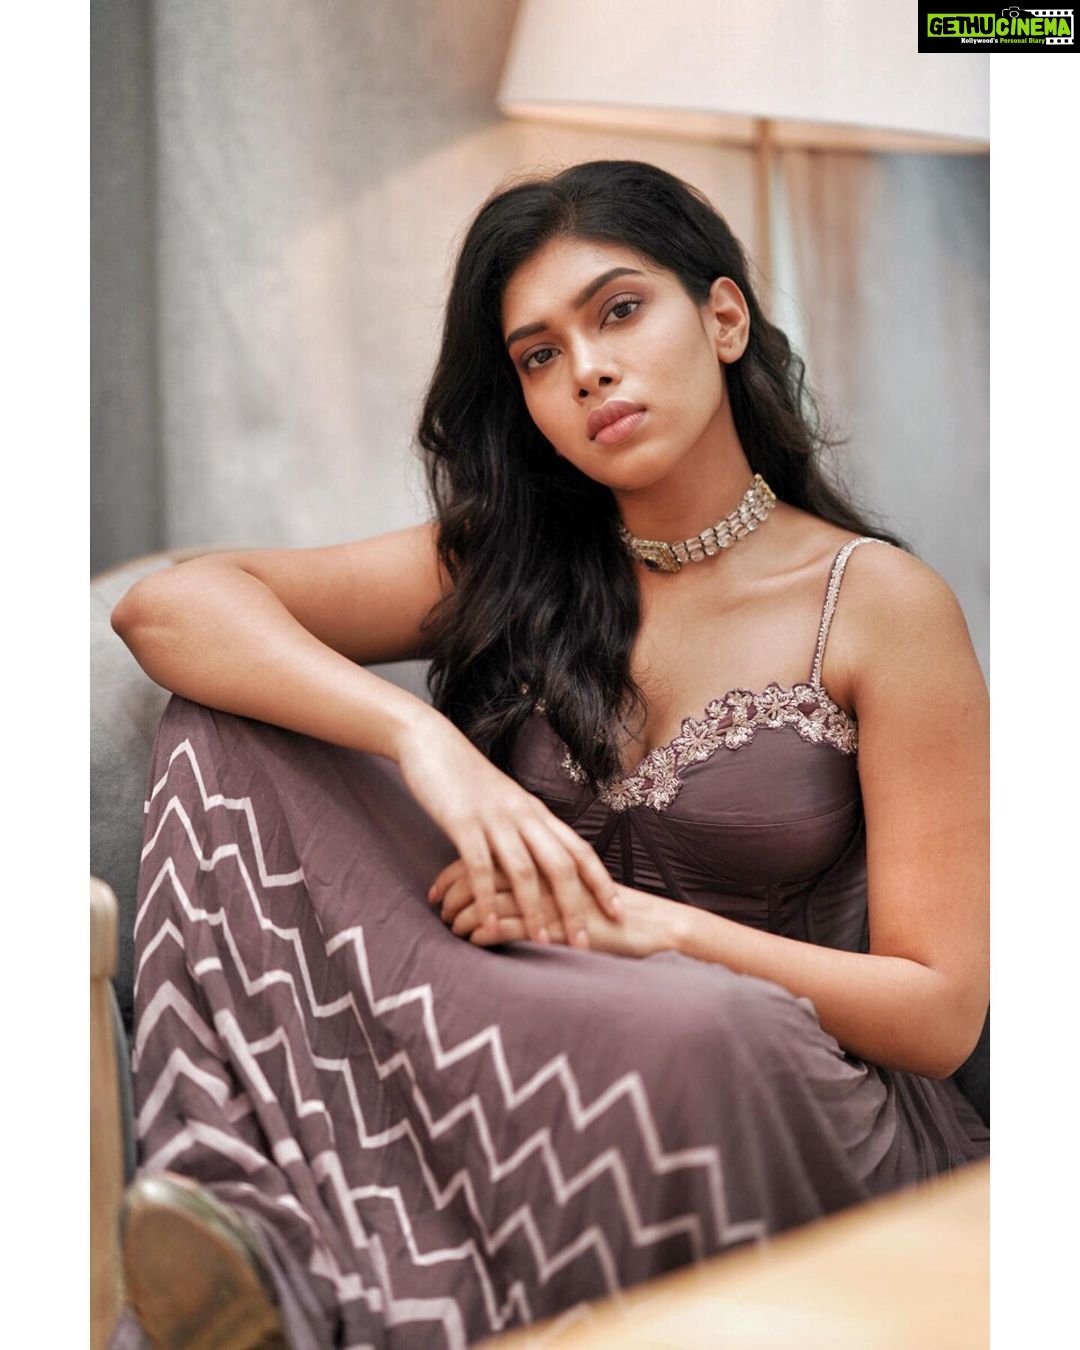 Dushara Vijayan Instagram - Shot by the super talented : @soozanapvan Label : @eclectic.by.zafrun Co-ordination : @drinkteaandread Hair : @puii_c_ammy Make up : @salomirdiamond www.dusharaofficial.com #dusharaofficial #actor #actress #model #indianmodel #indianactor #indianactress #fashion #design #photoshoot #indian #southindian #stylist #makeup #artist #fashionmodel #style #modeling The Leela Palace Chennai